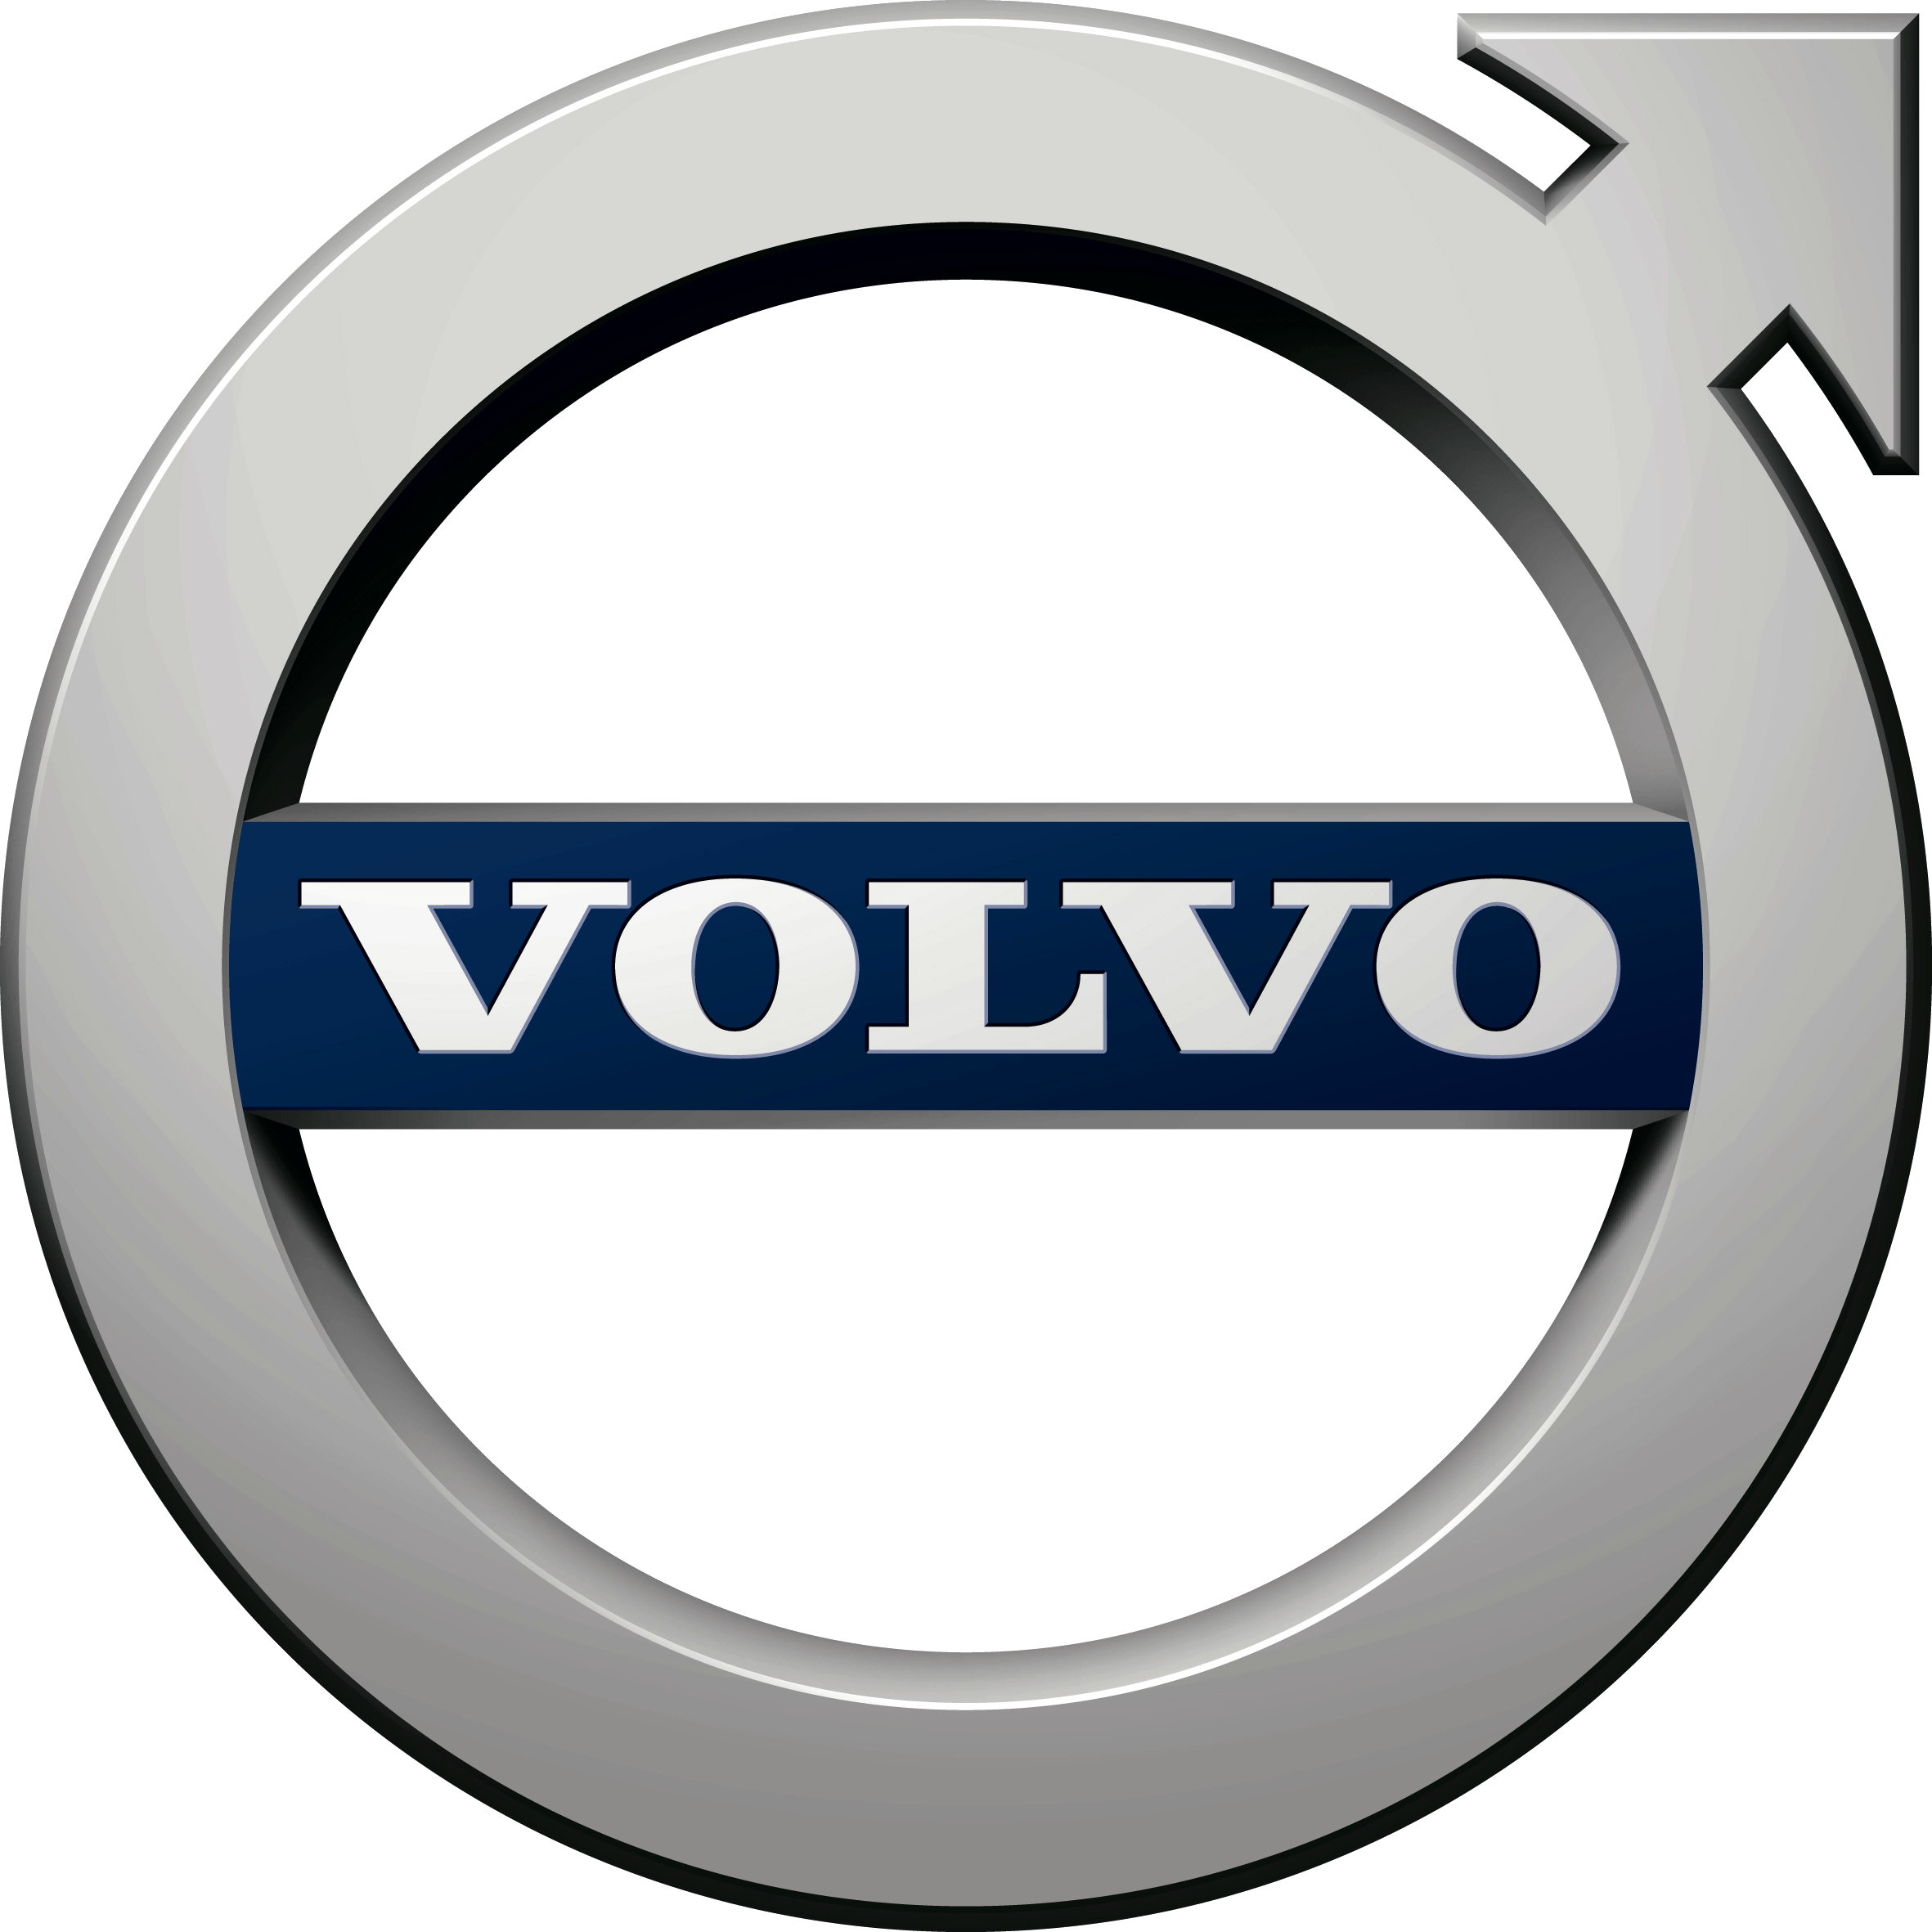 Rich Car Logo - Volvo Logo, Volvo Car Symbol Meaning and History | Car Brand Names.com